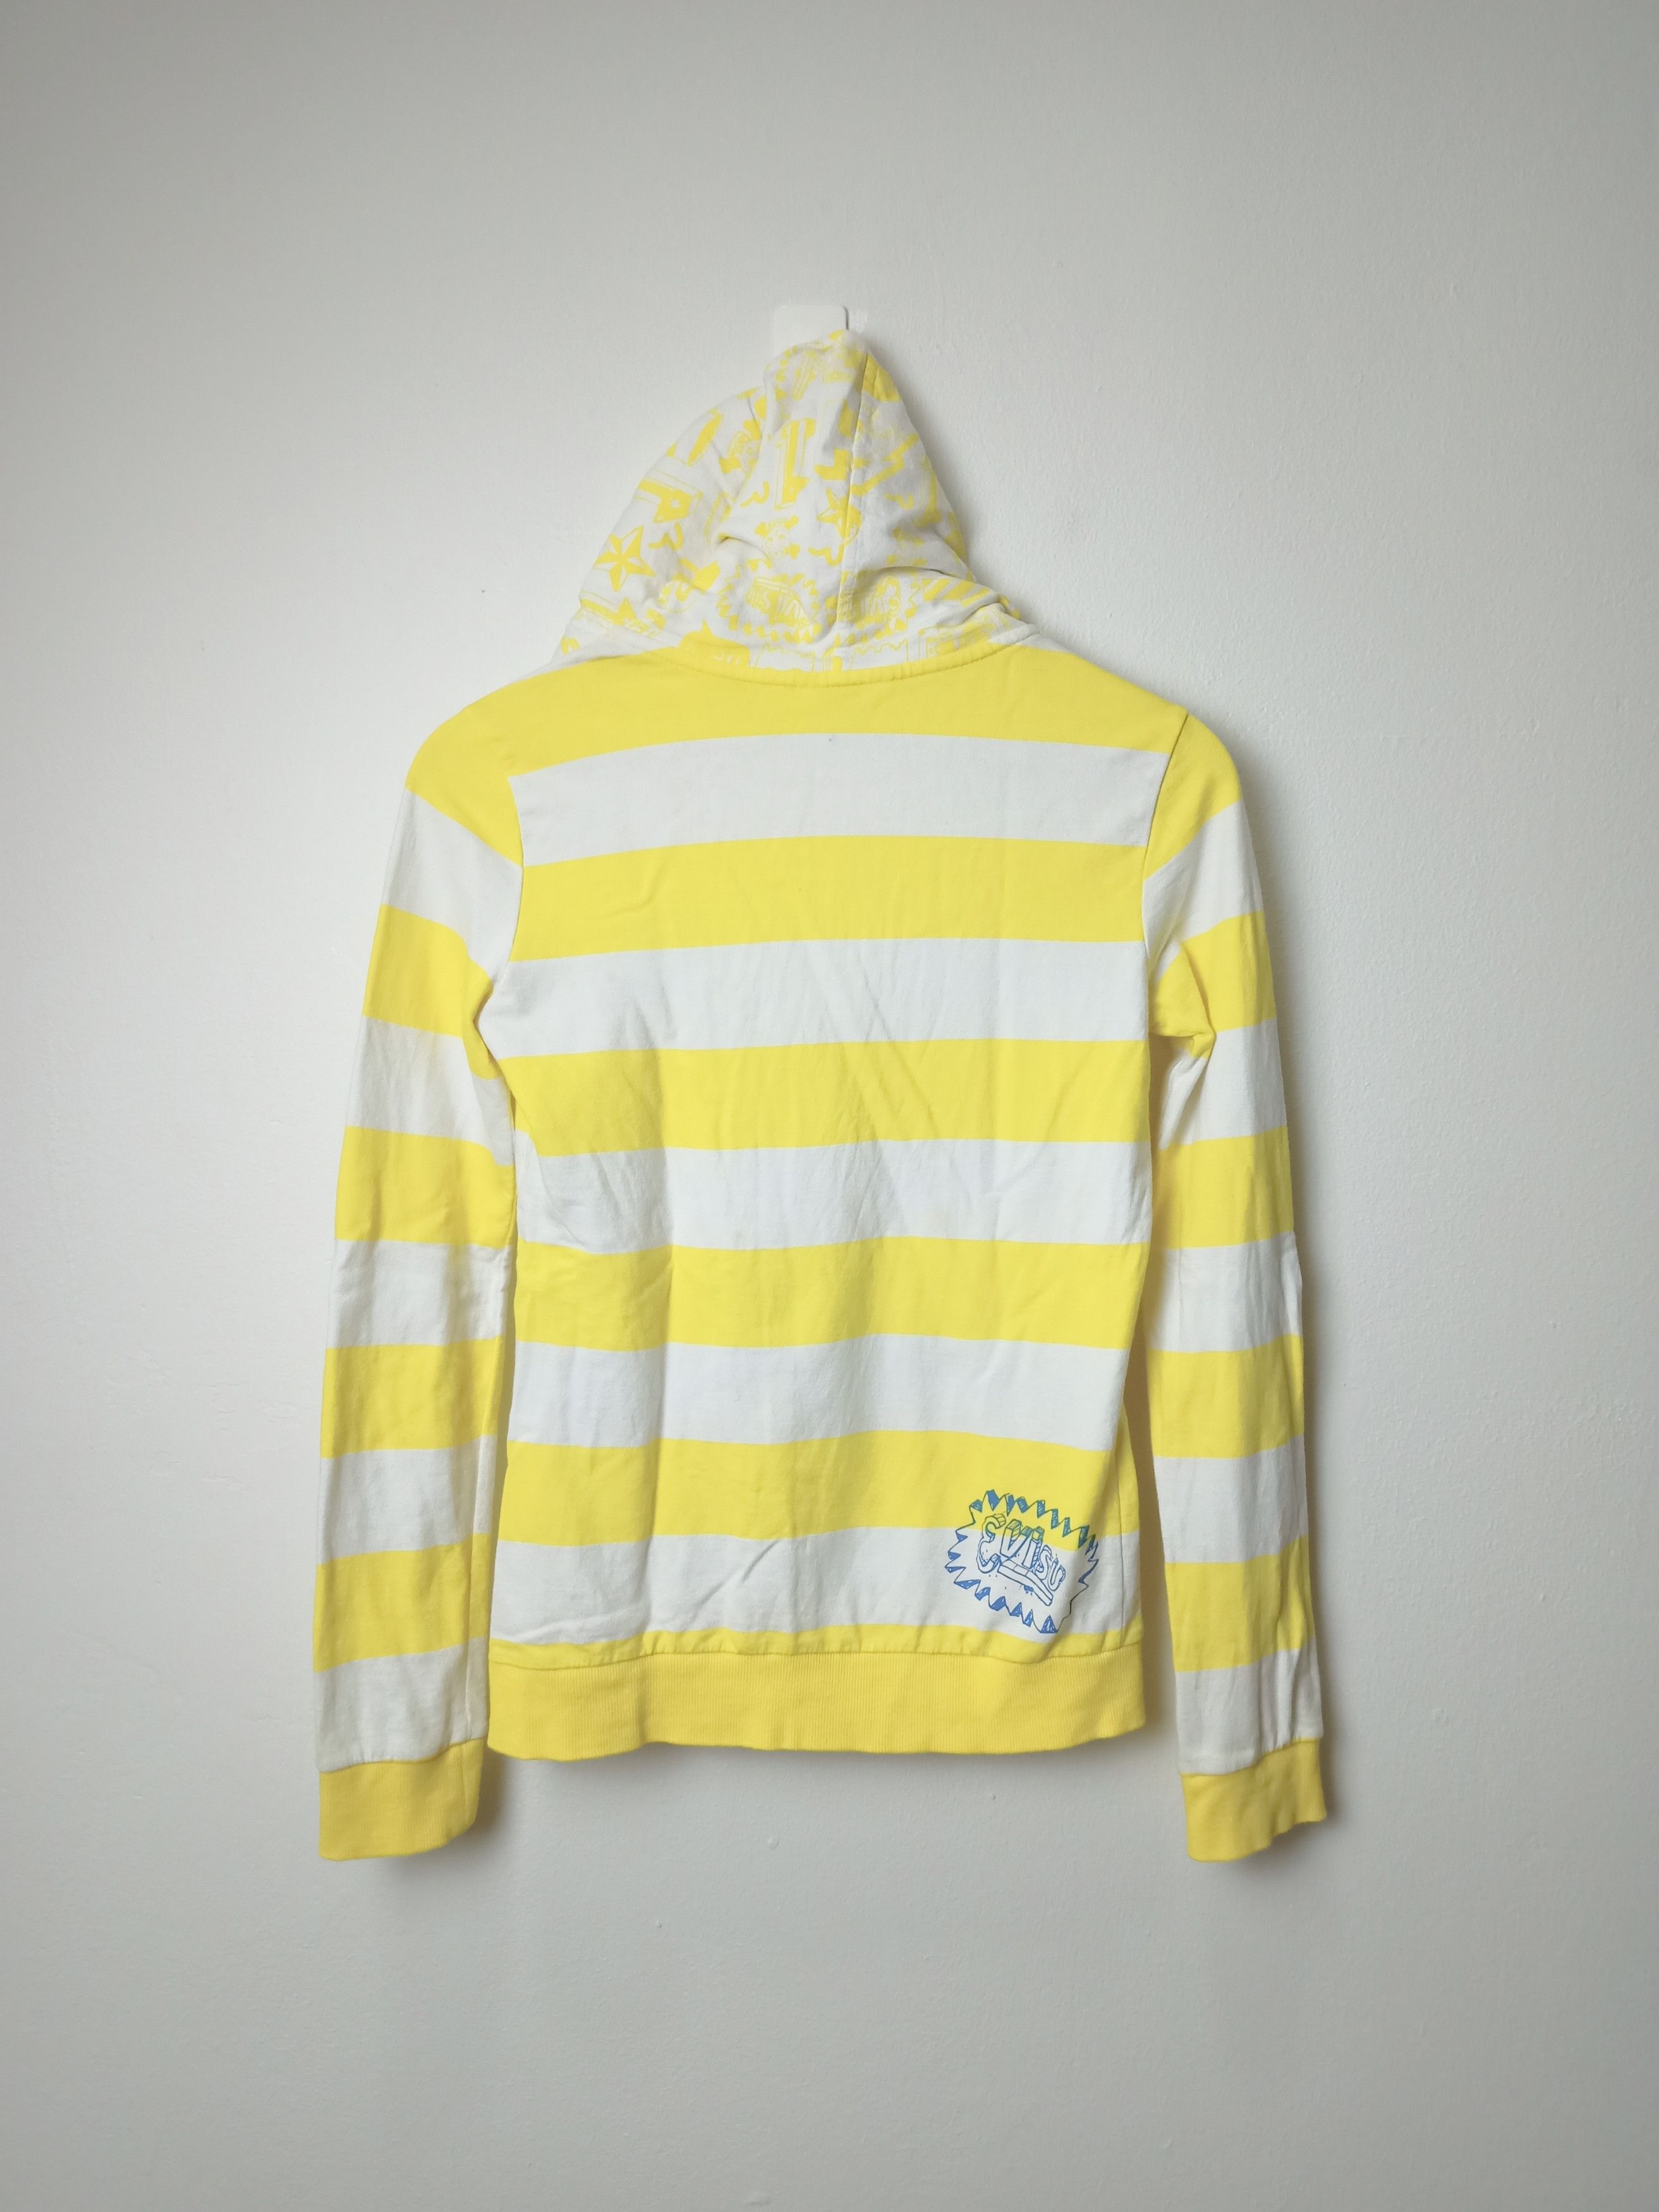 Japanese Brand Evisu Sweetshirt Hoodies Size S / US 4 / IT 40 - 5 Thumbnail